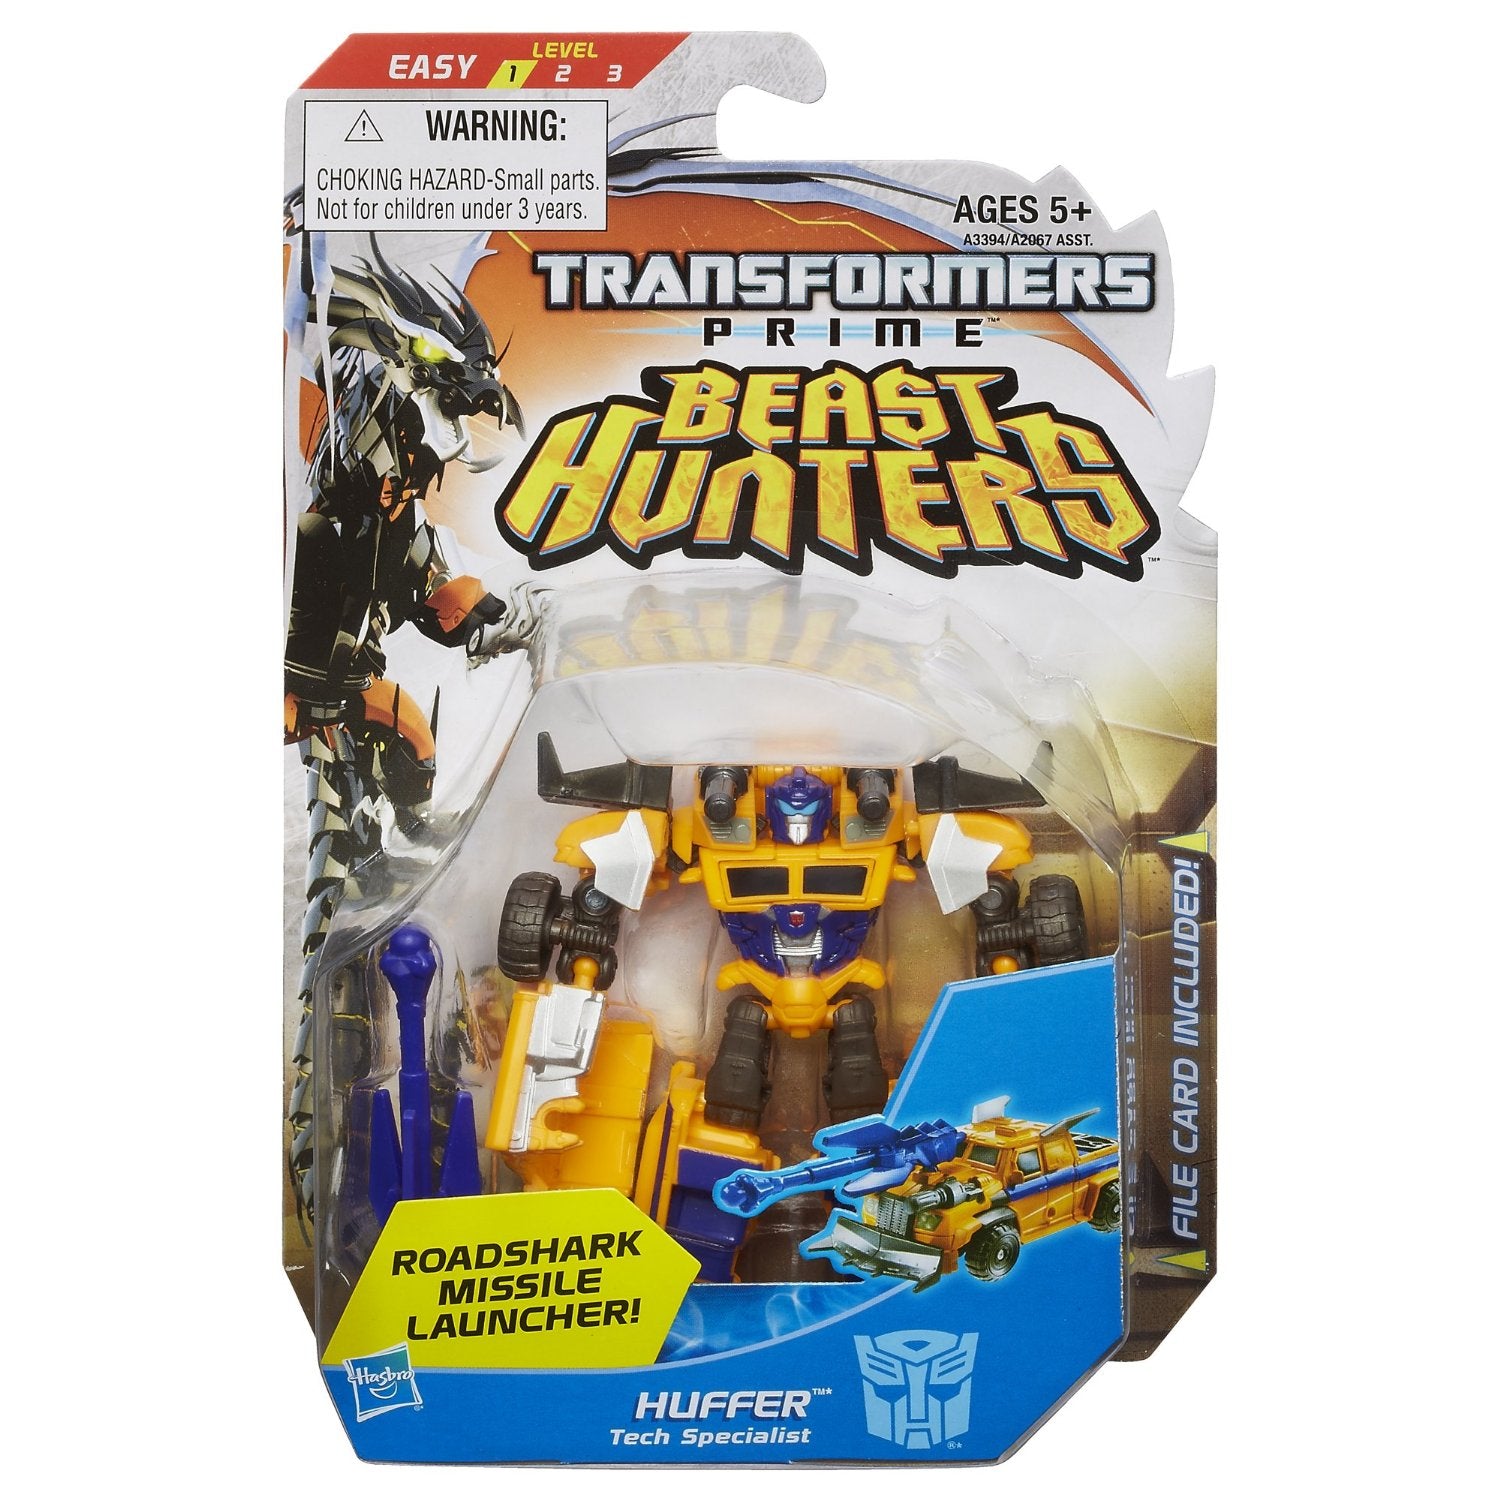 Transformers Prime Beast Hunters #009 Huffer Tech Specialist Commander Class Series 3